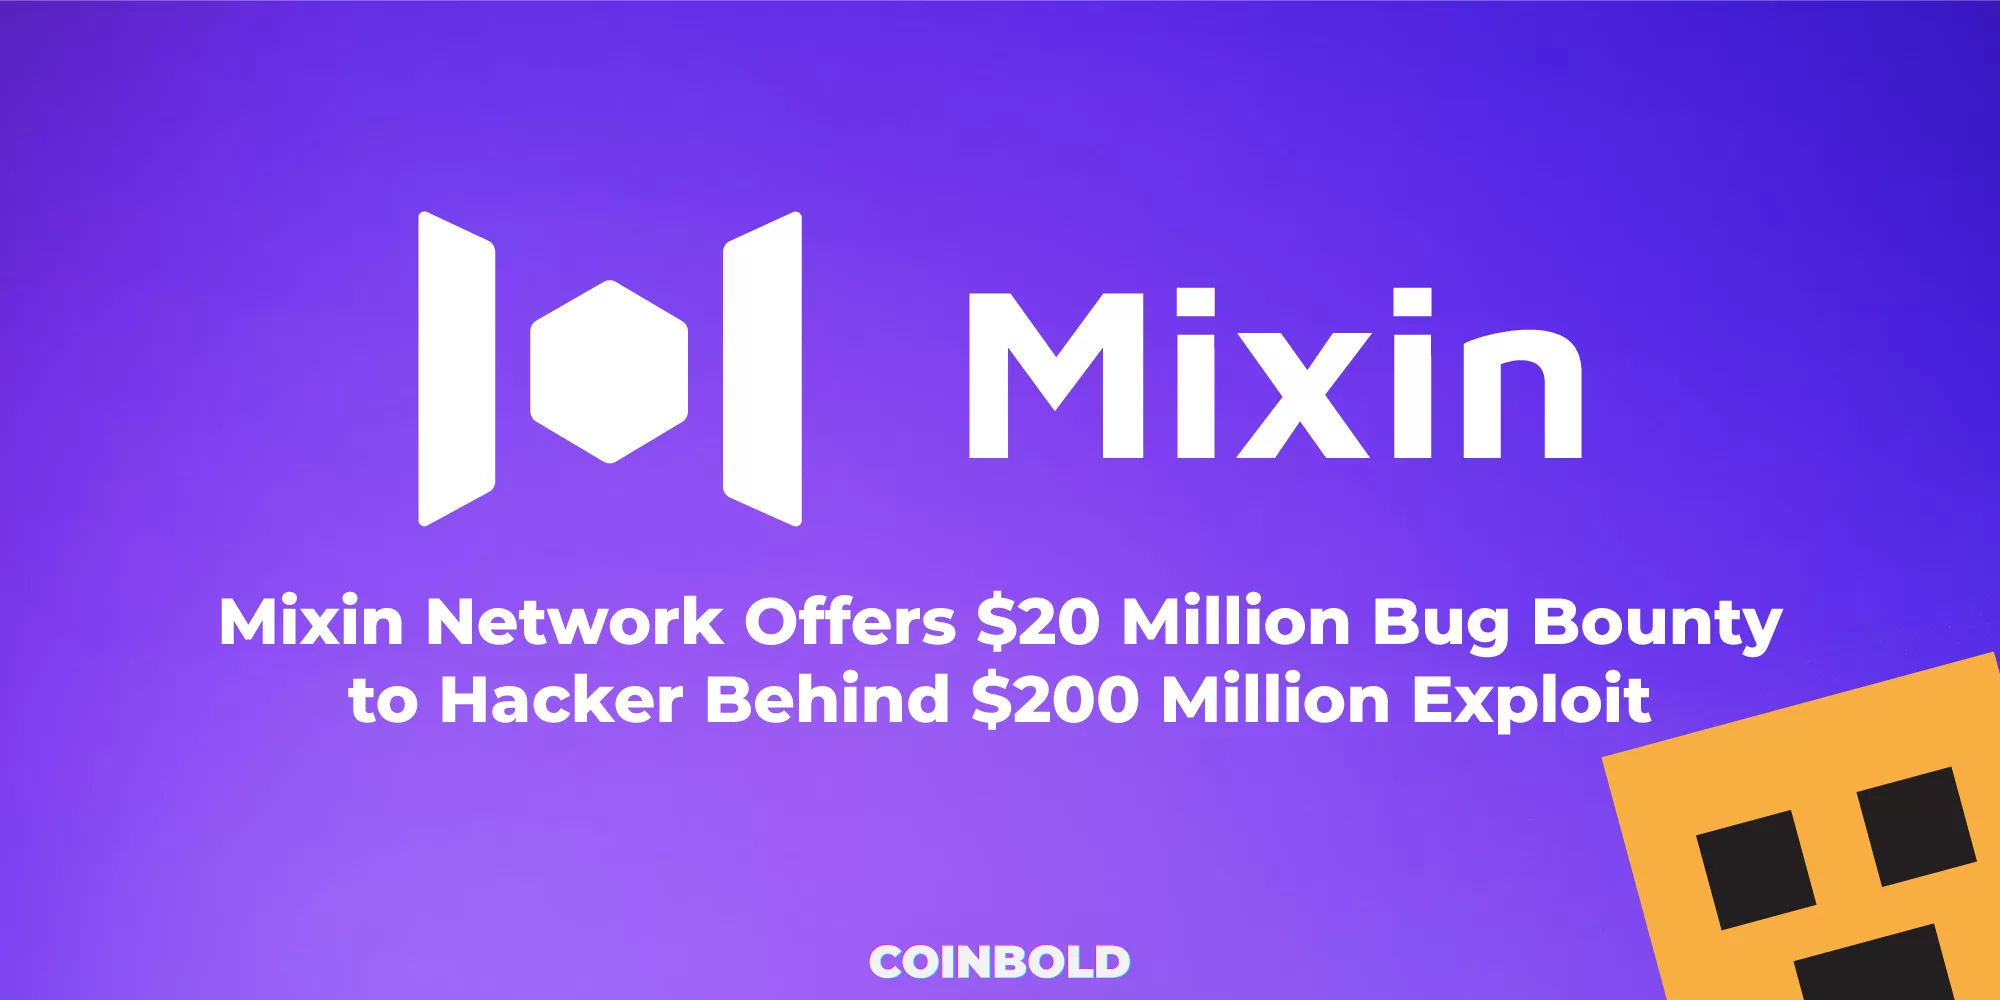 Mixin Network Offers $20 Million Bug Bounty to Hacker Behind $200 Million Exploit